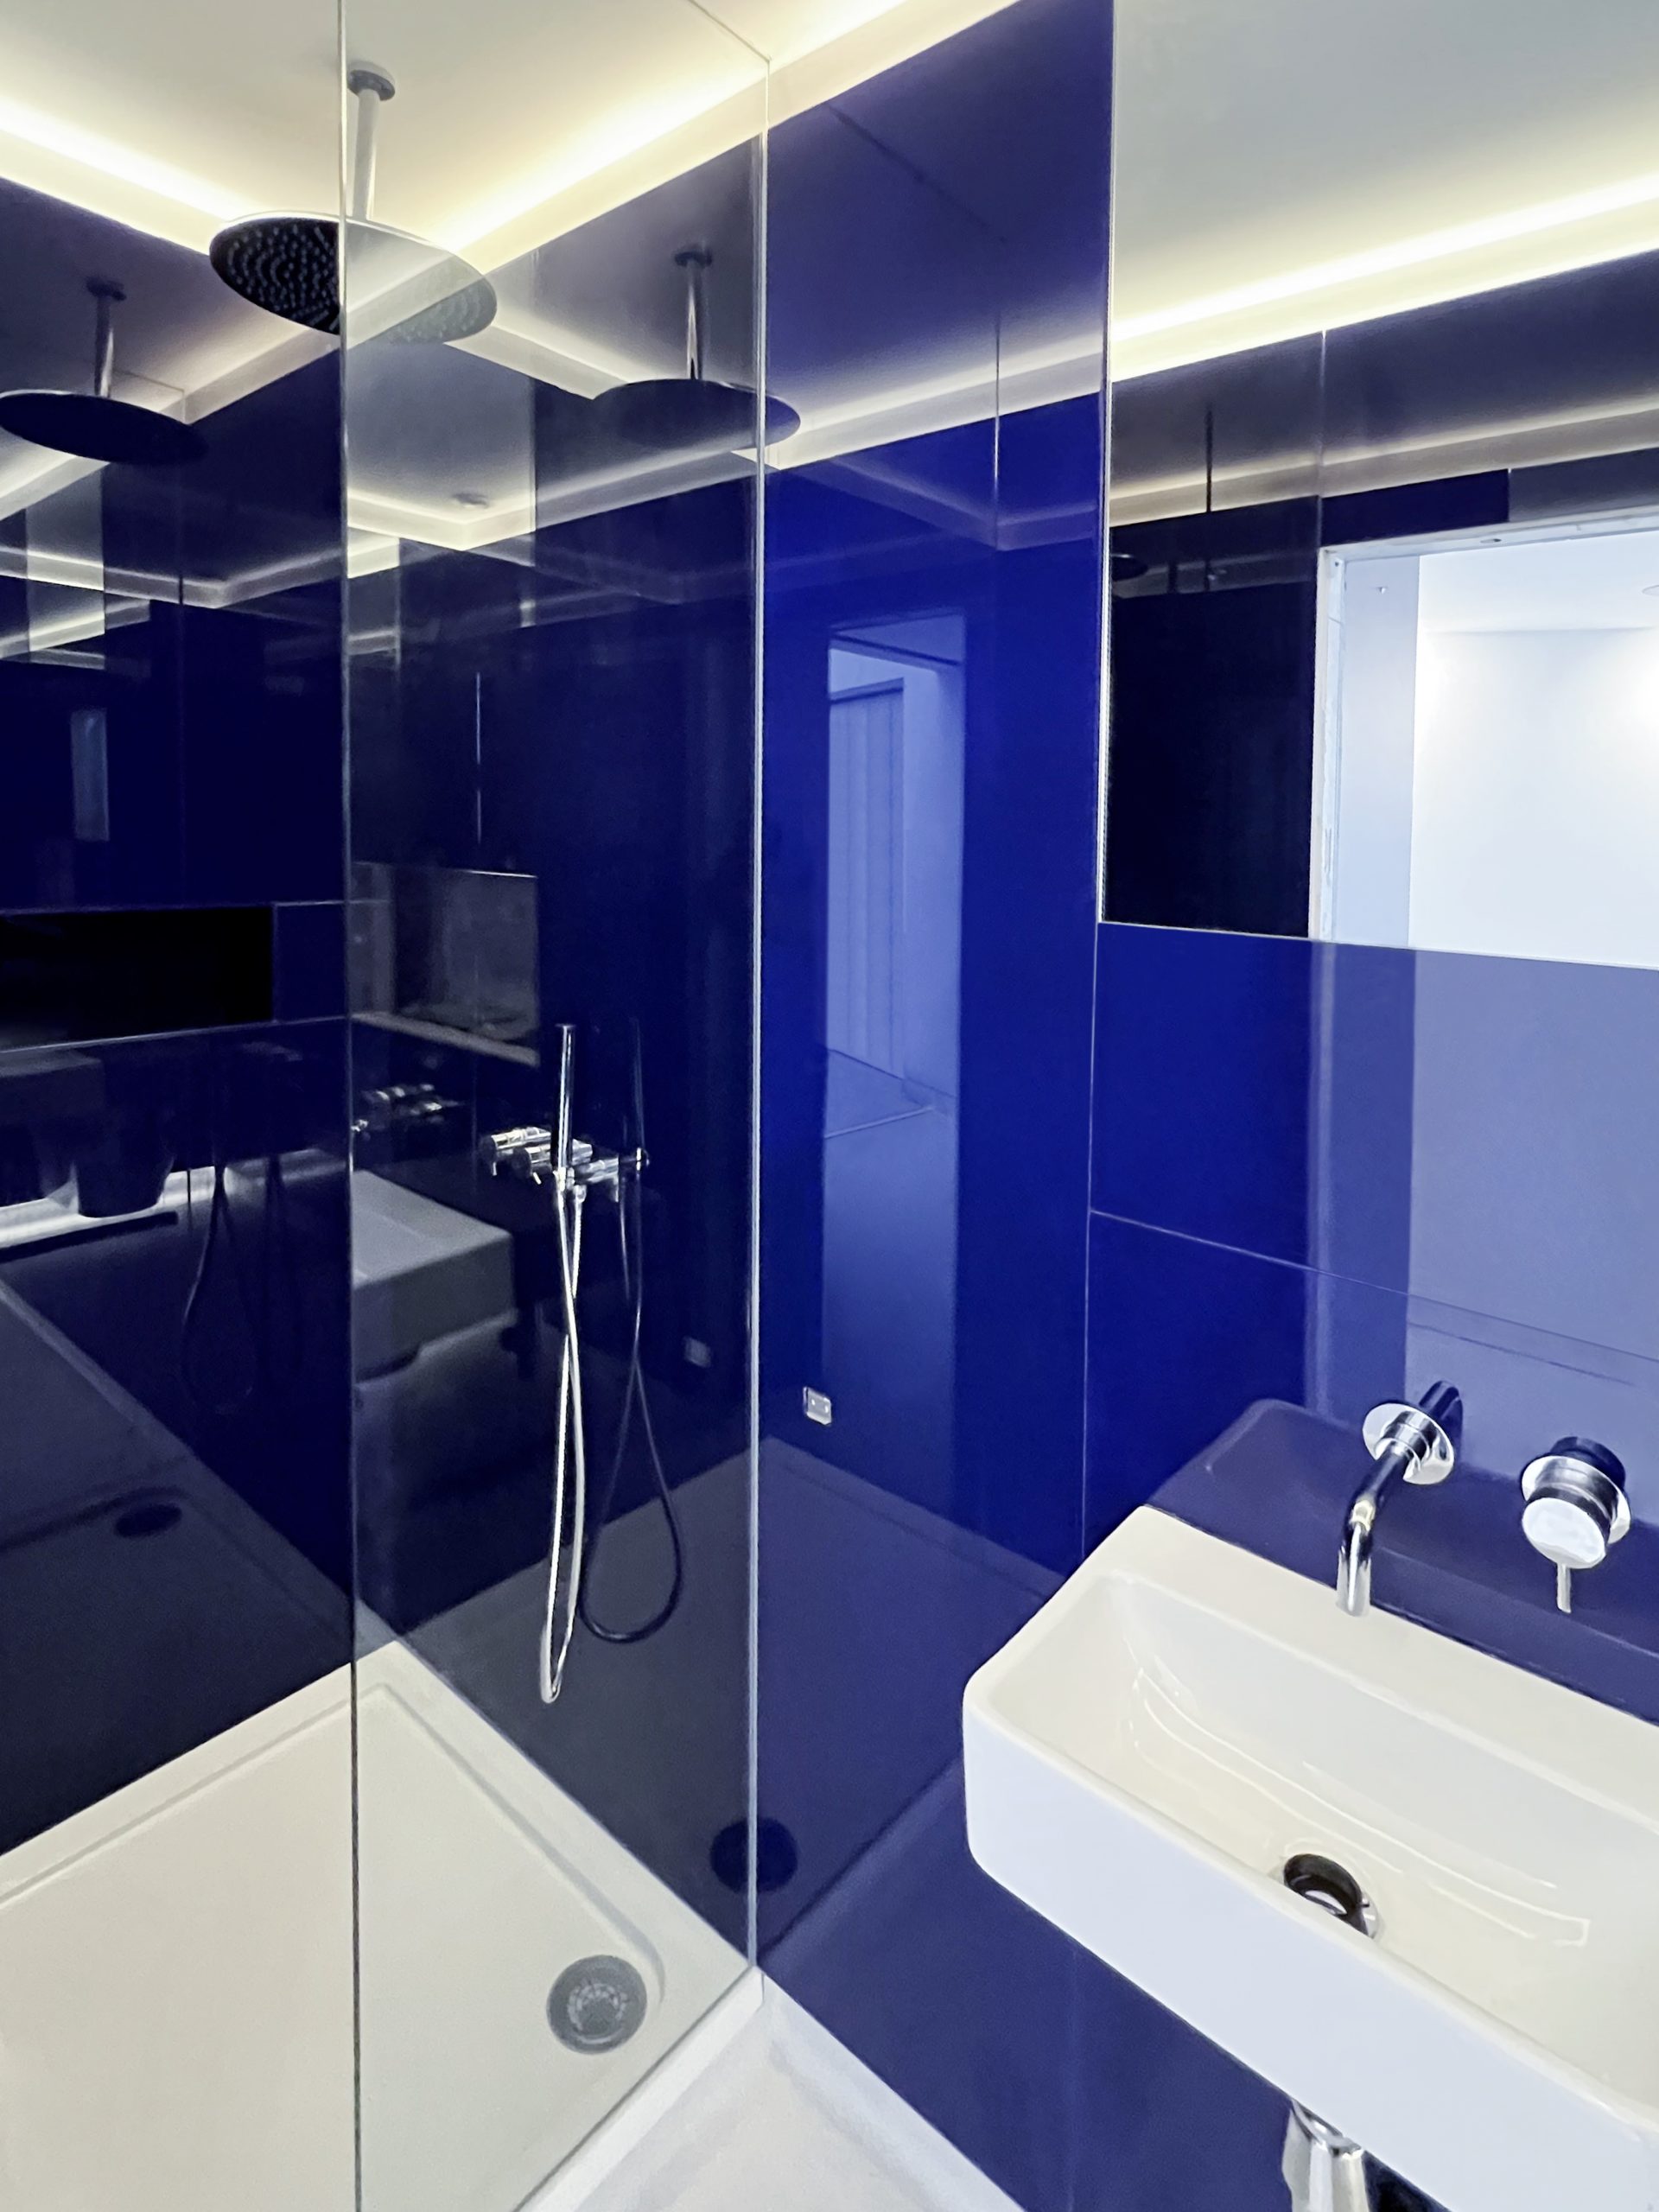 glass shower enclosure with blue bathroom tiles